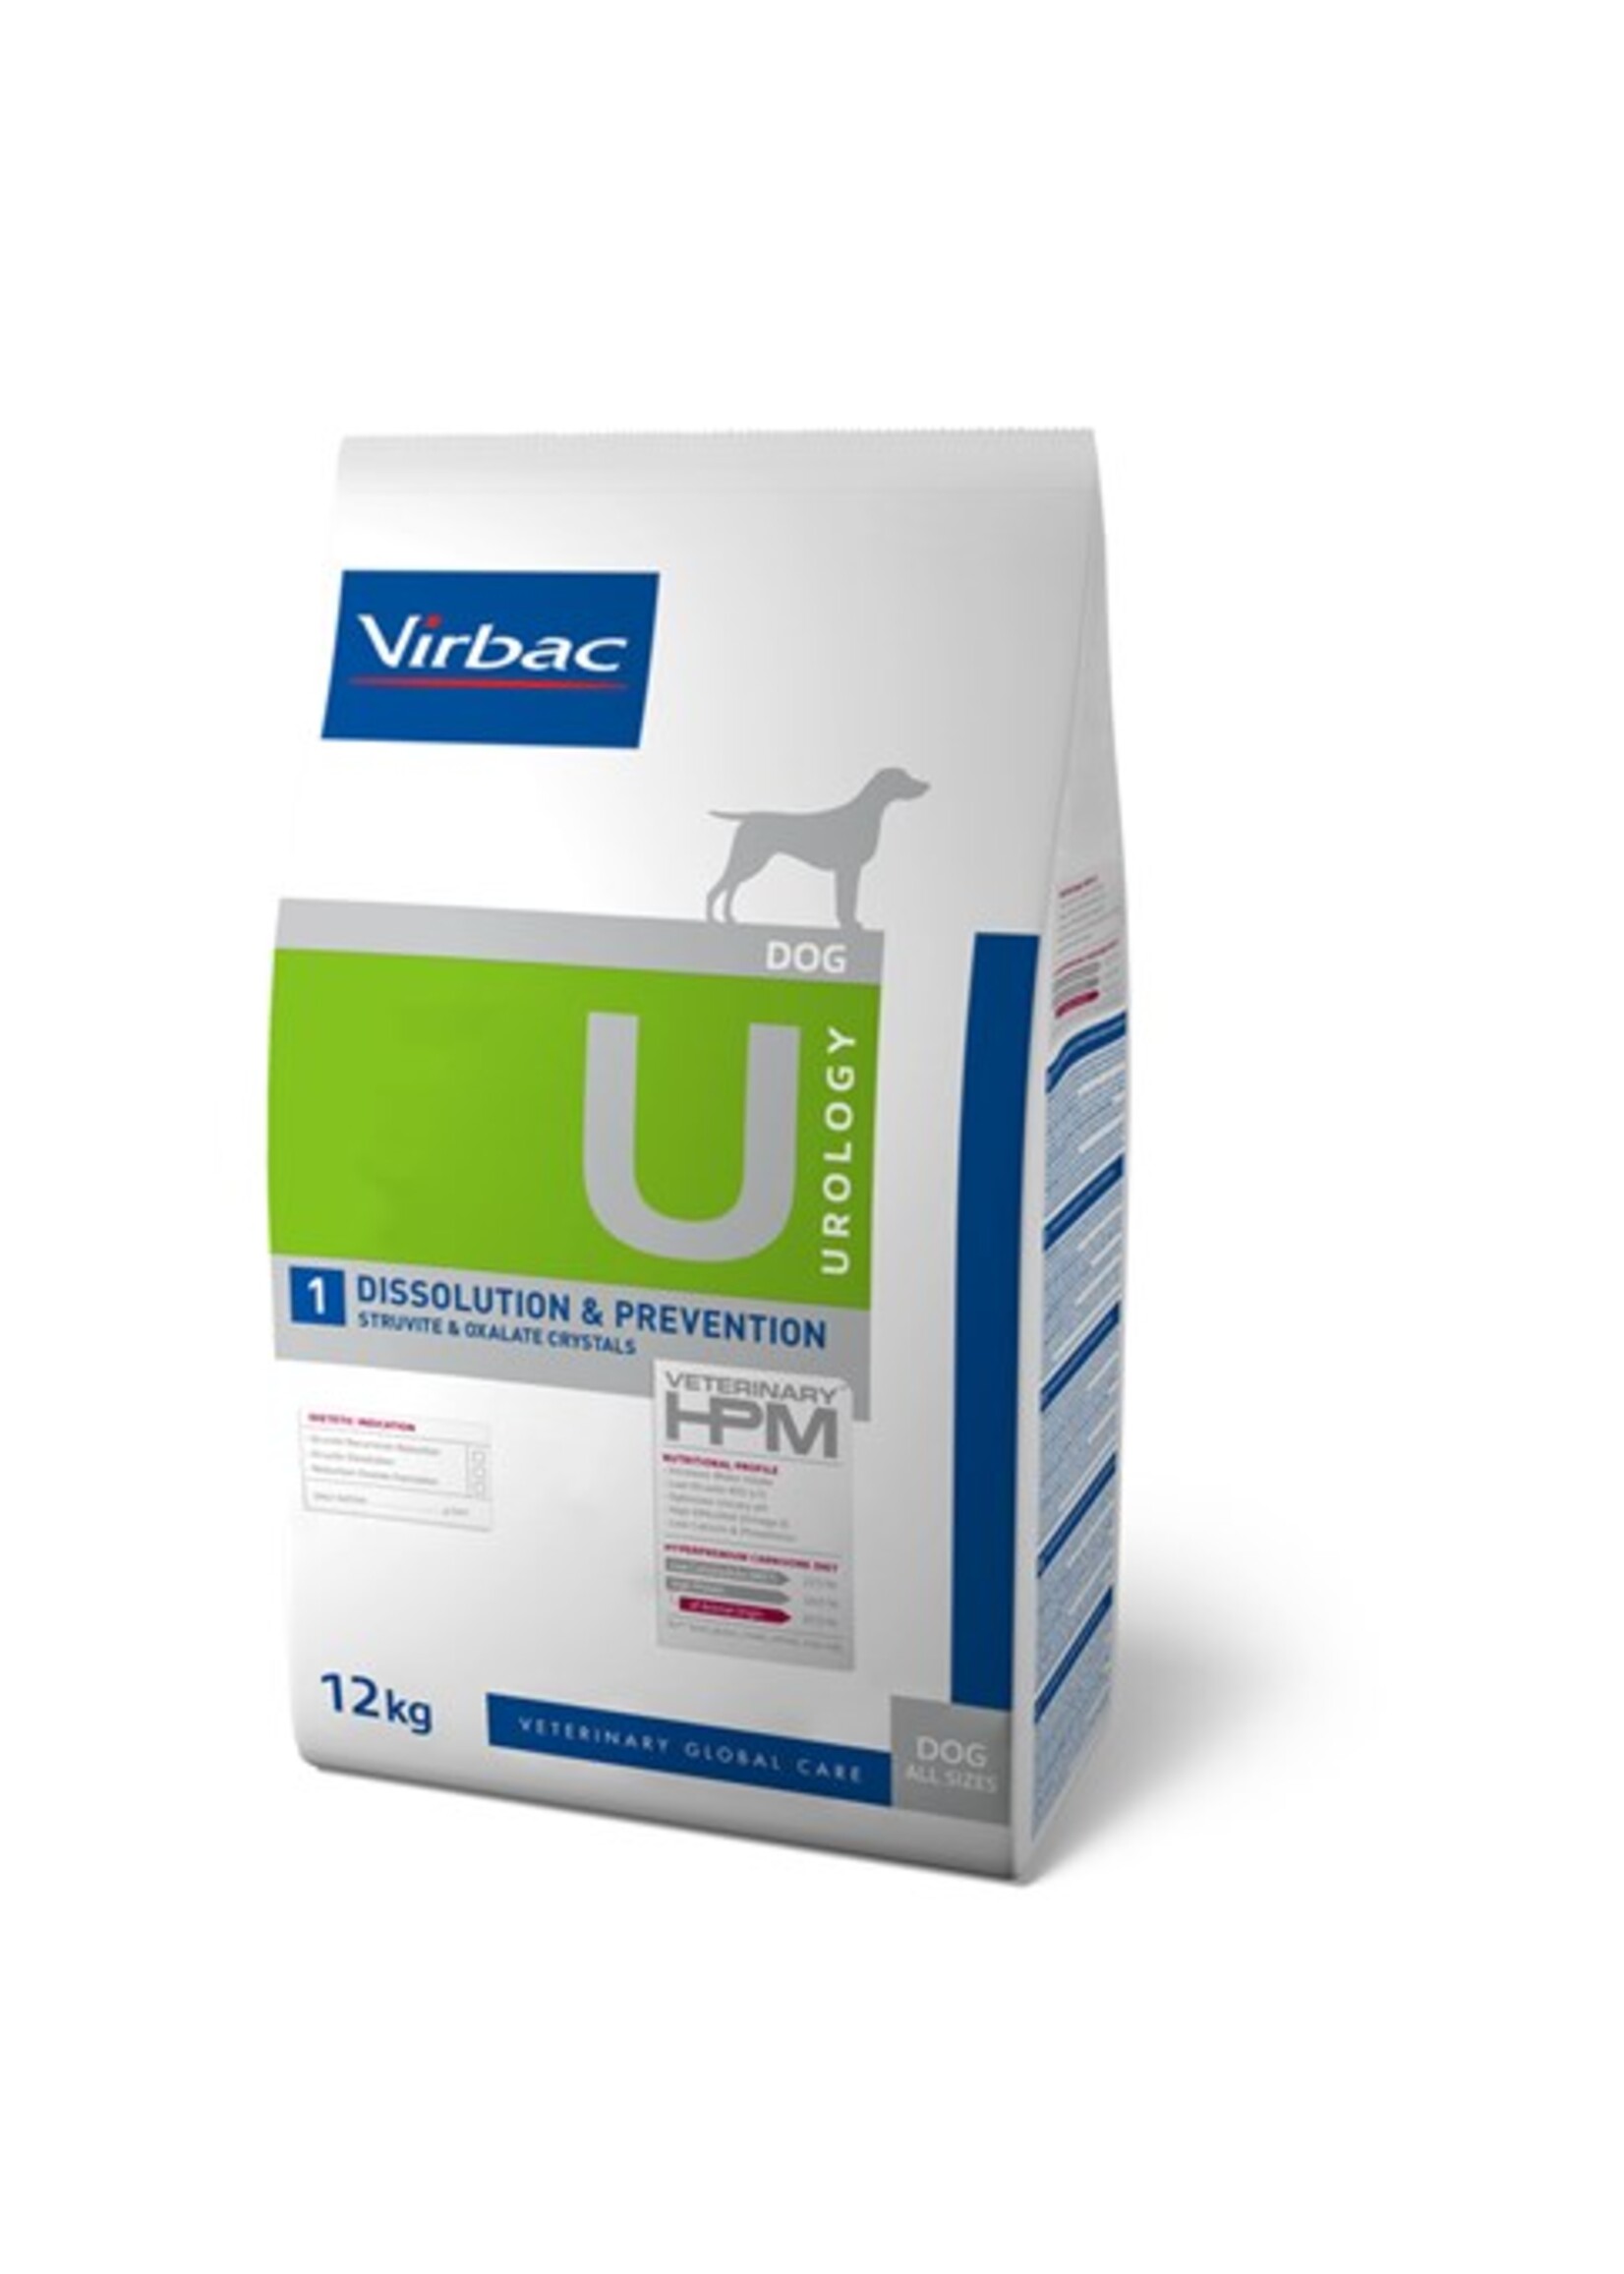 Virbac Virbac Hpm Dog Urology Struvite Dissolution/prevention U1 12kg